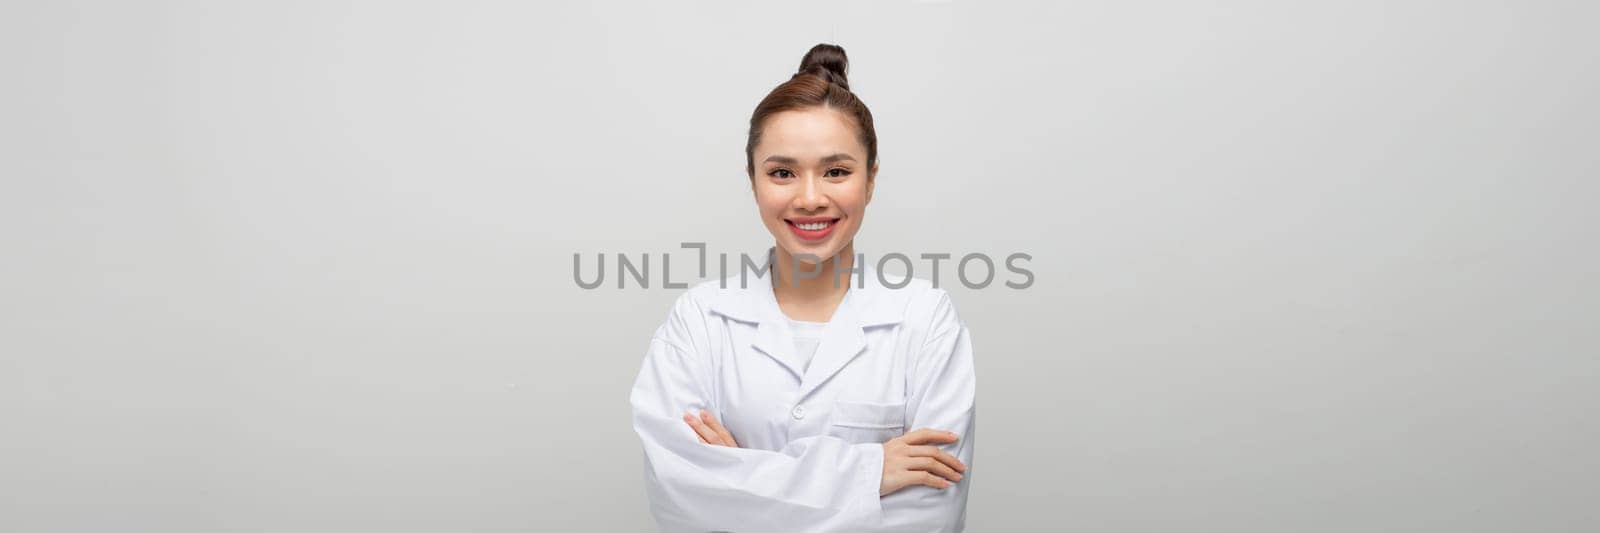 happy smiling female doctor or scientist in white coat
